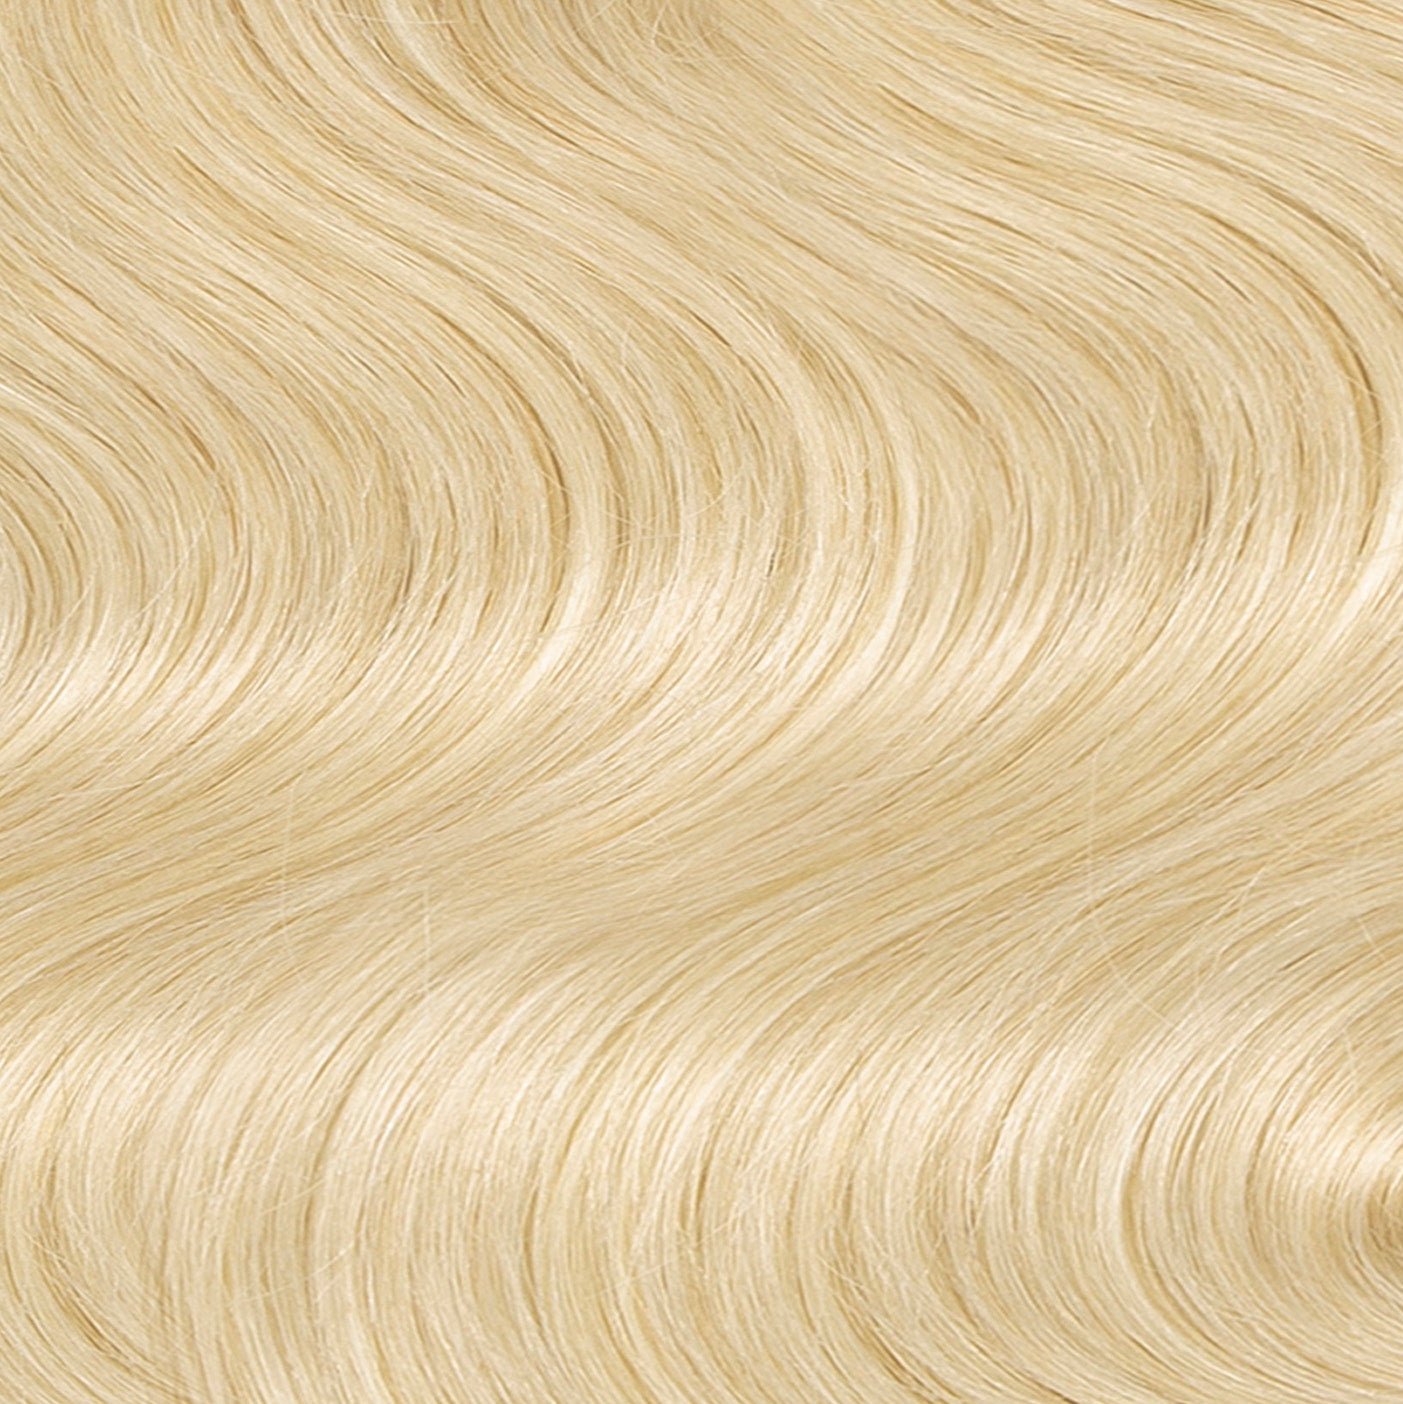 Nano Ring Hair Extensions #60 Platinum Blonde